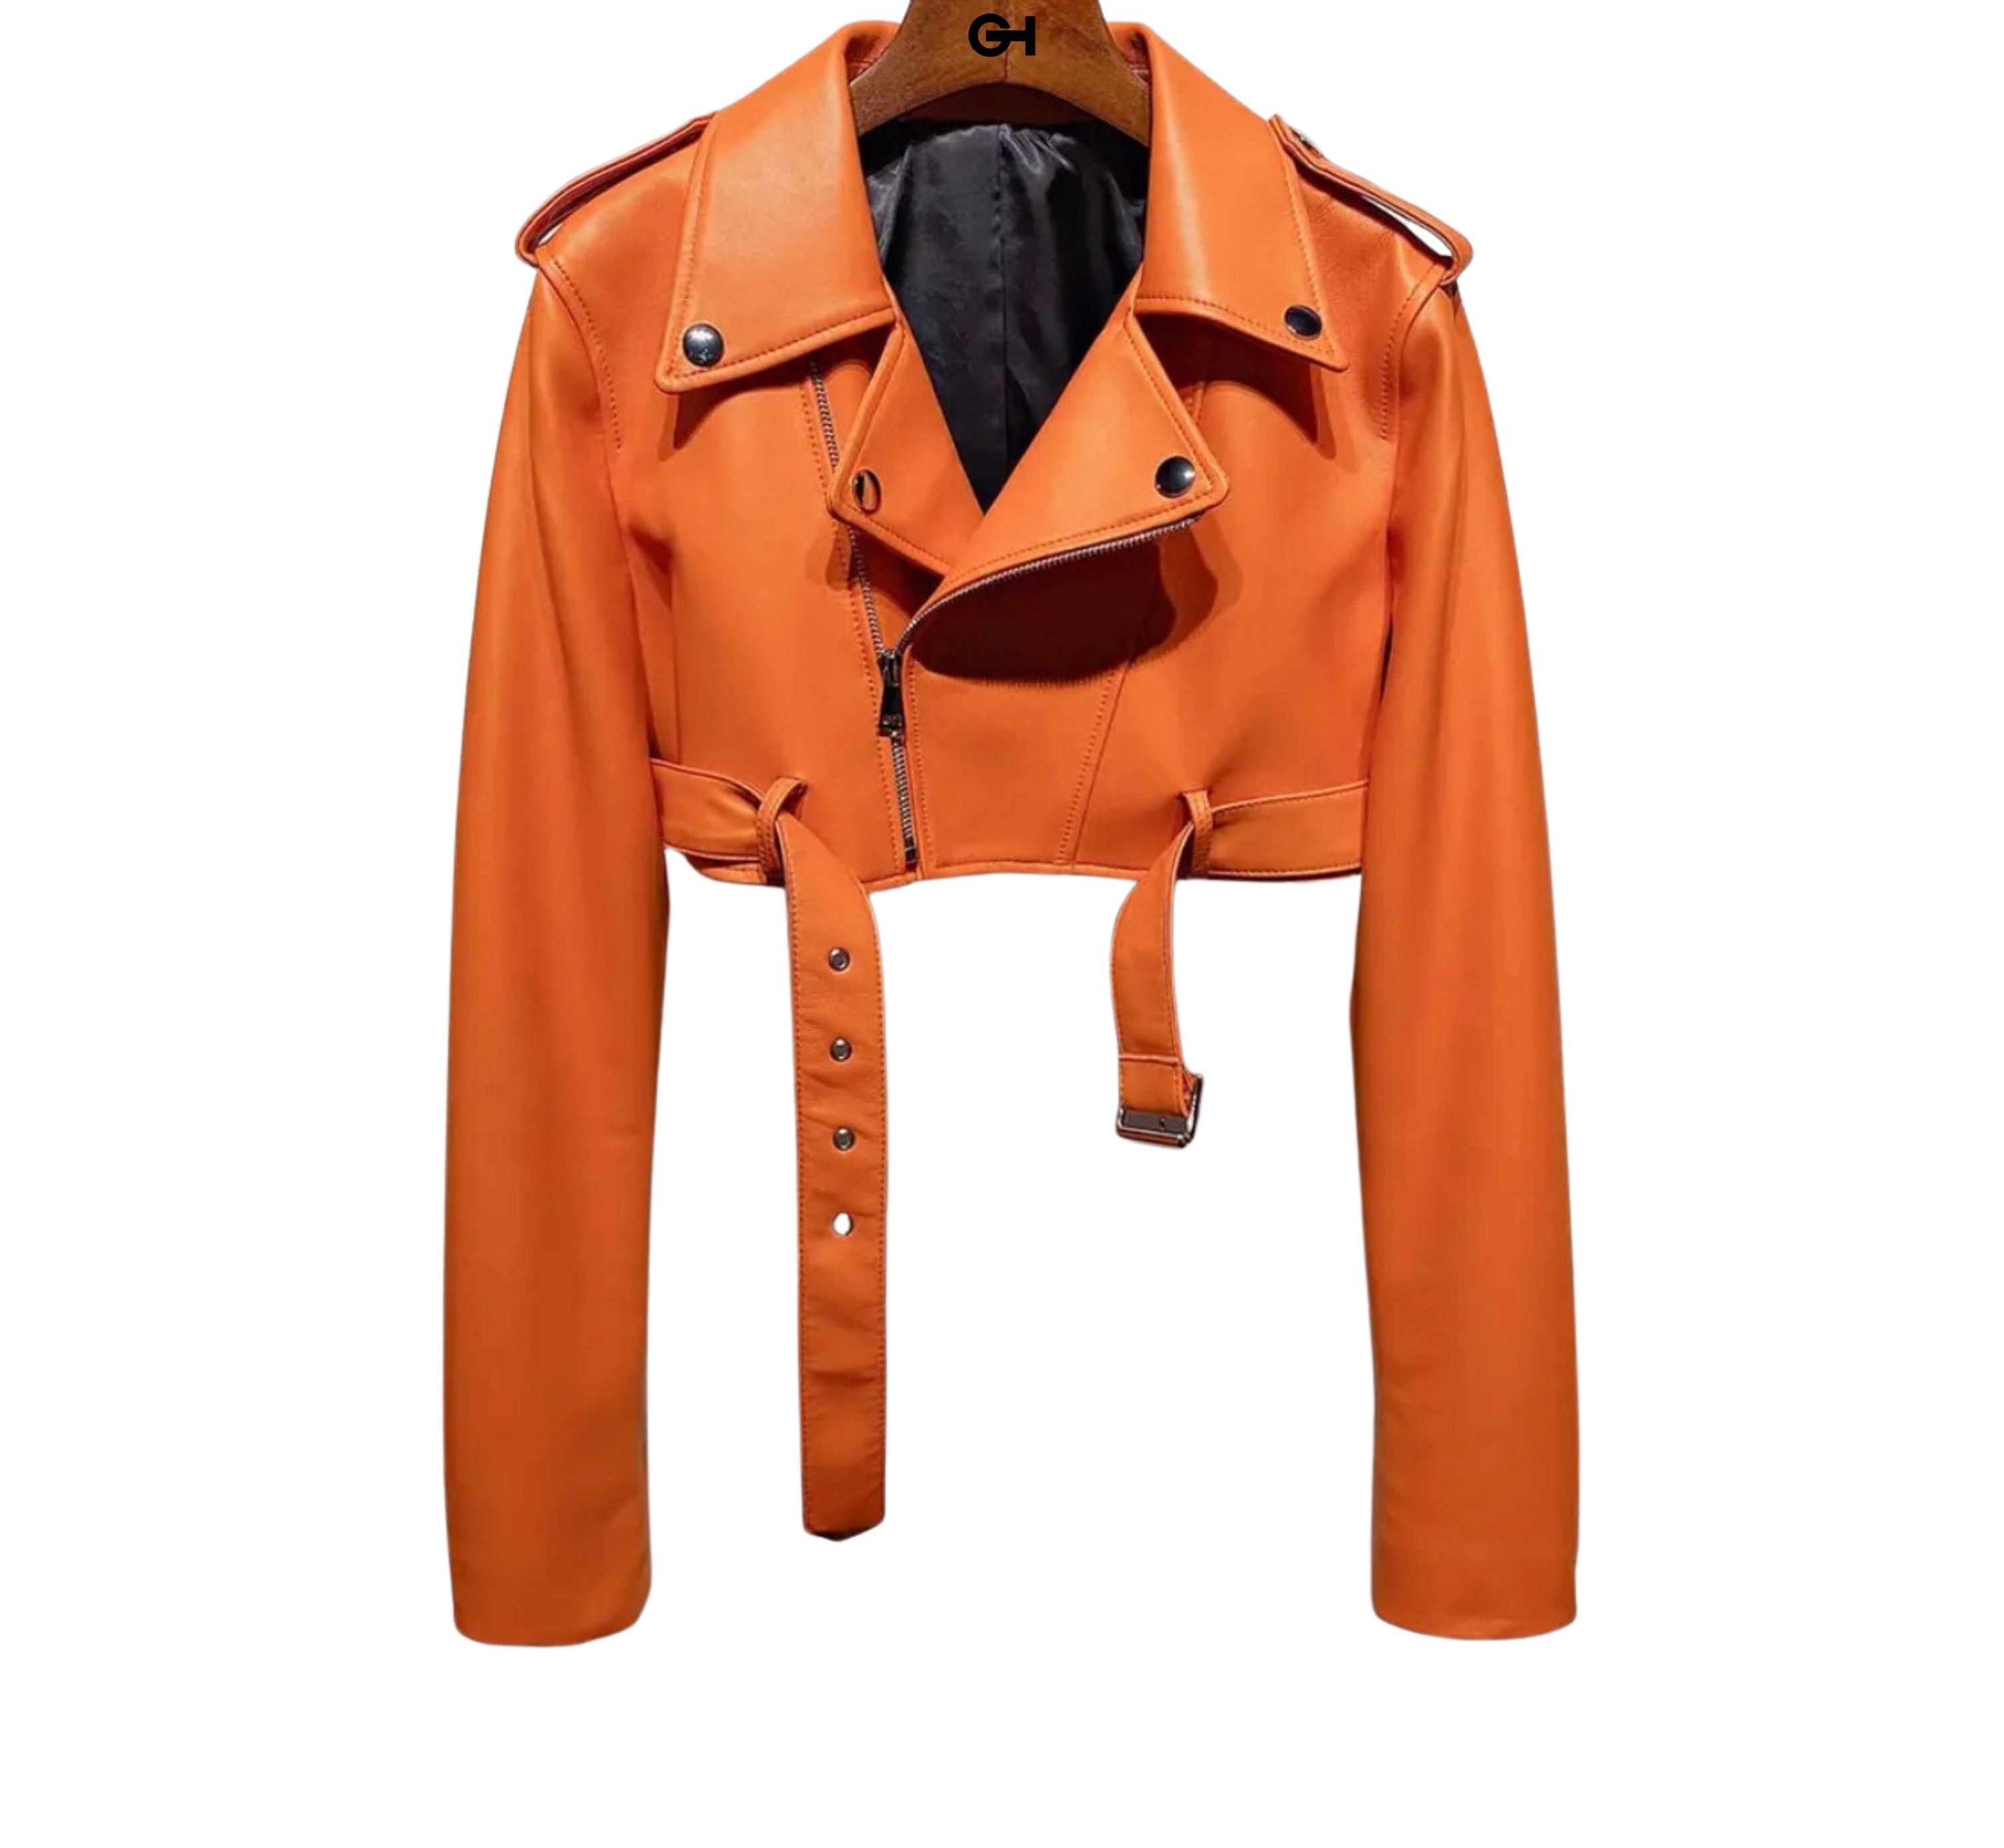 GOLDxTEAL orange leather crop motorcycle jacket.